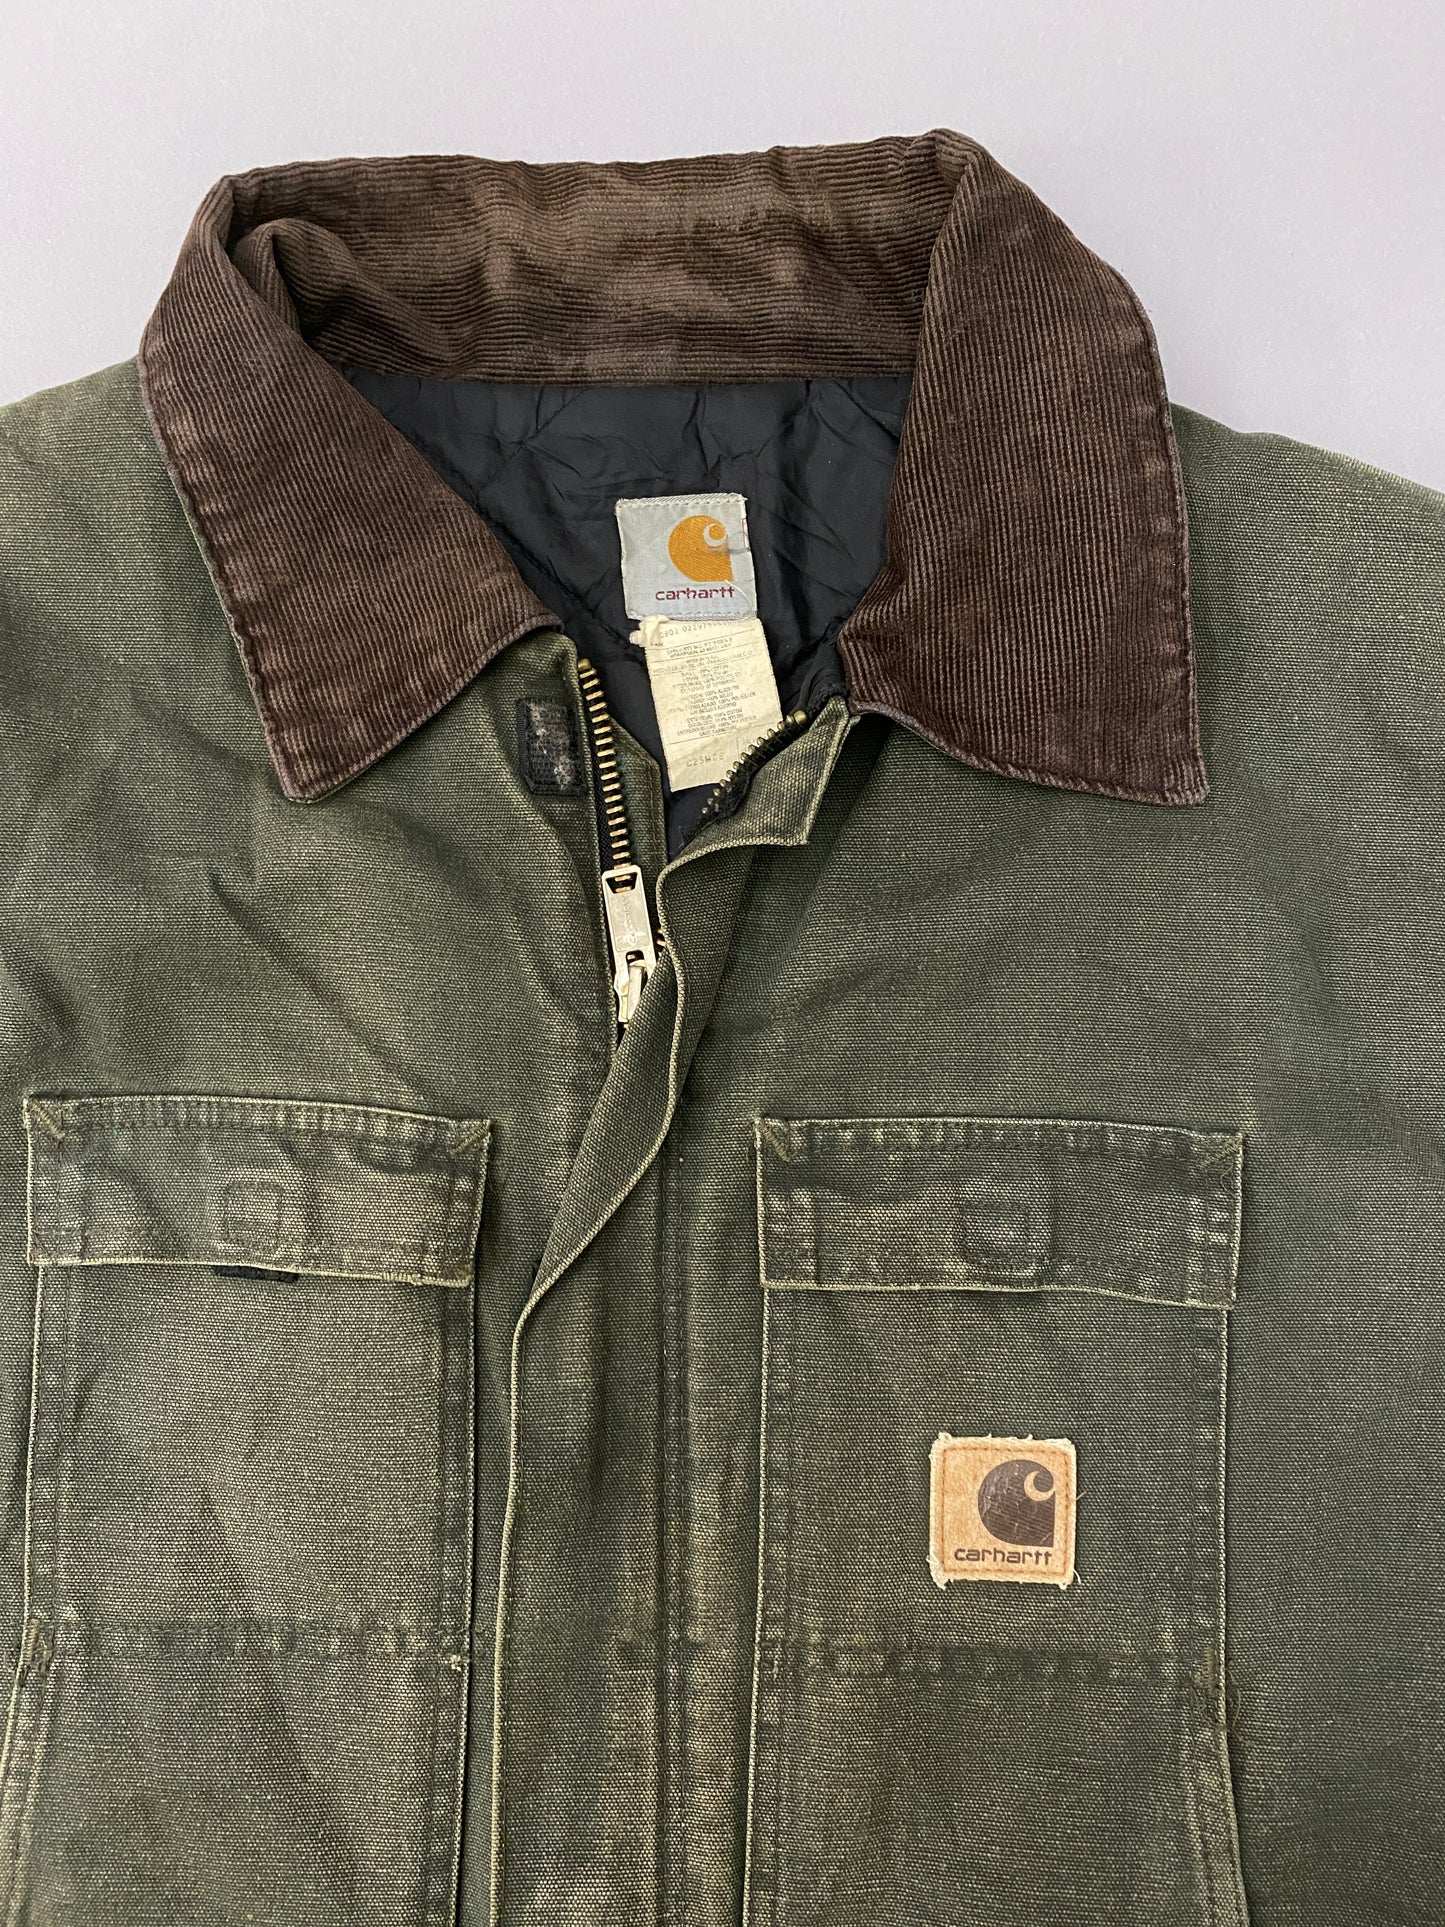 Carhartt Duck Vintage Jacket